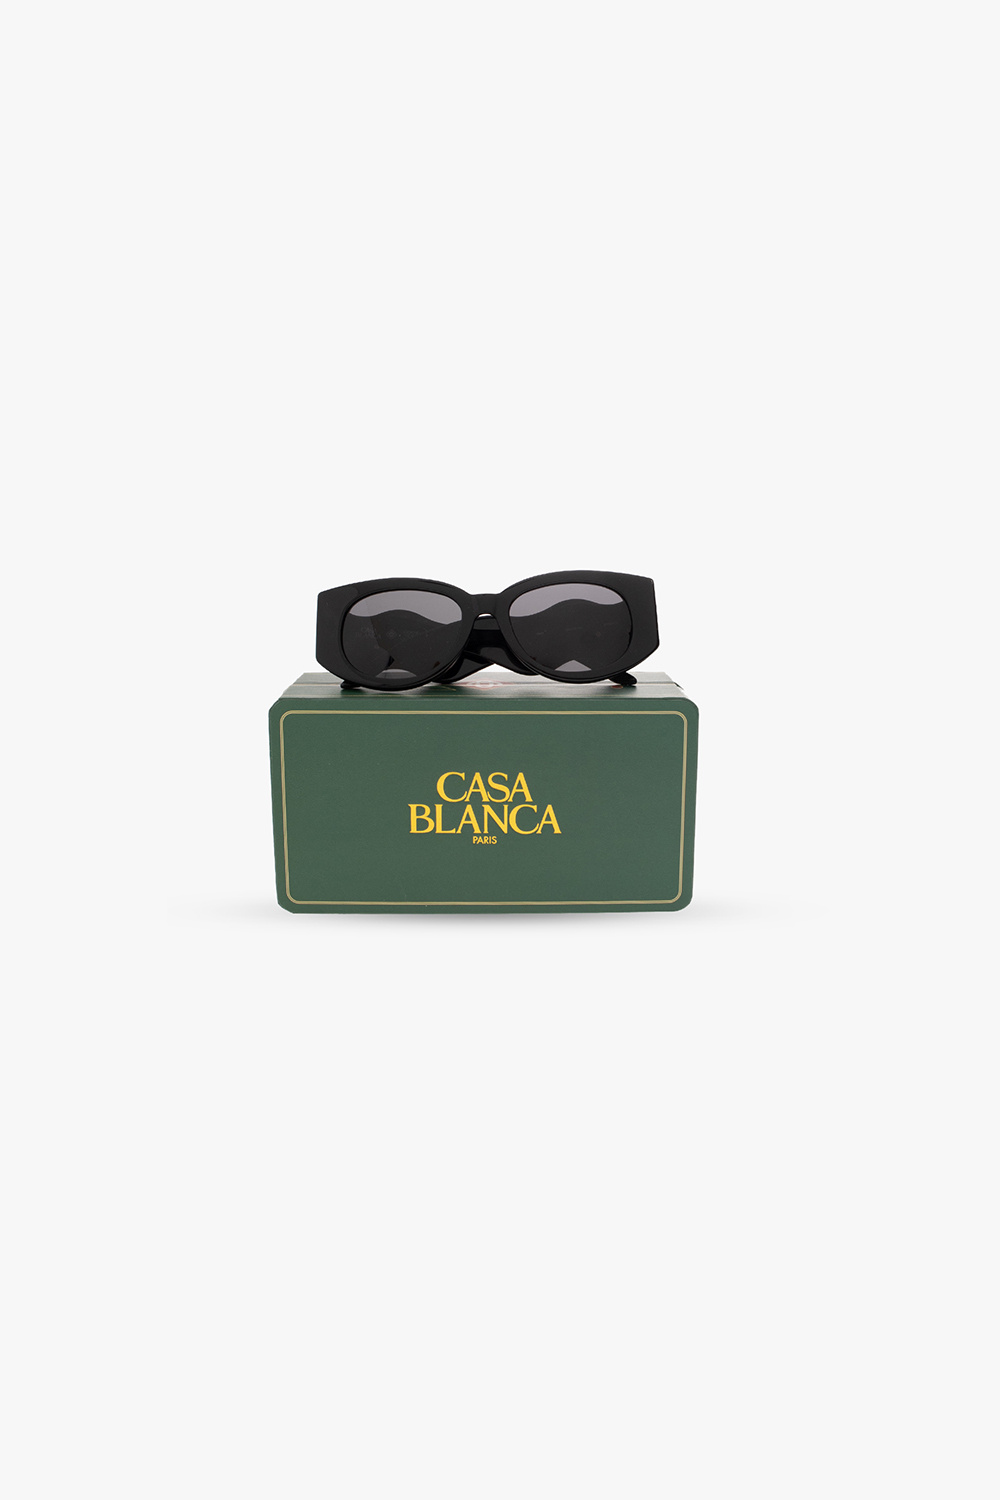 Casablanca Narrow Classic Sunglasses